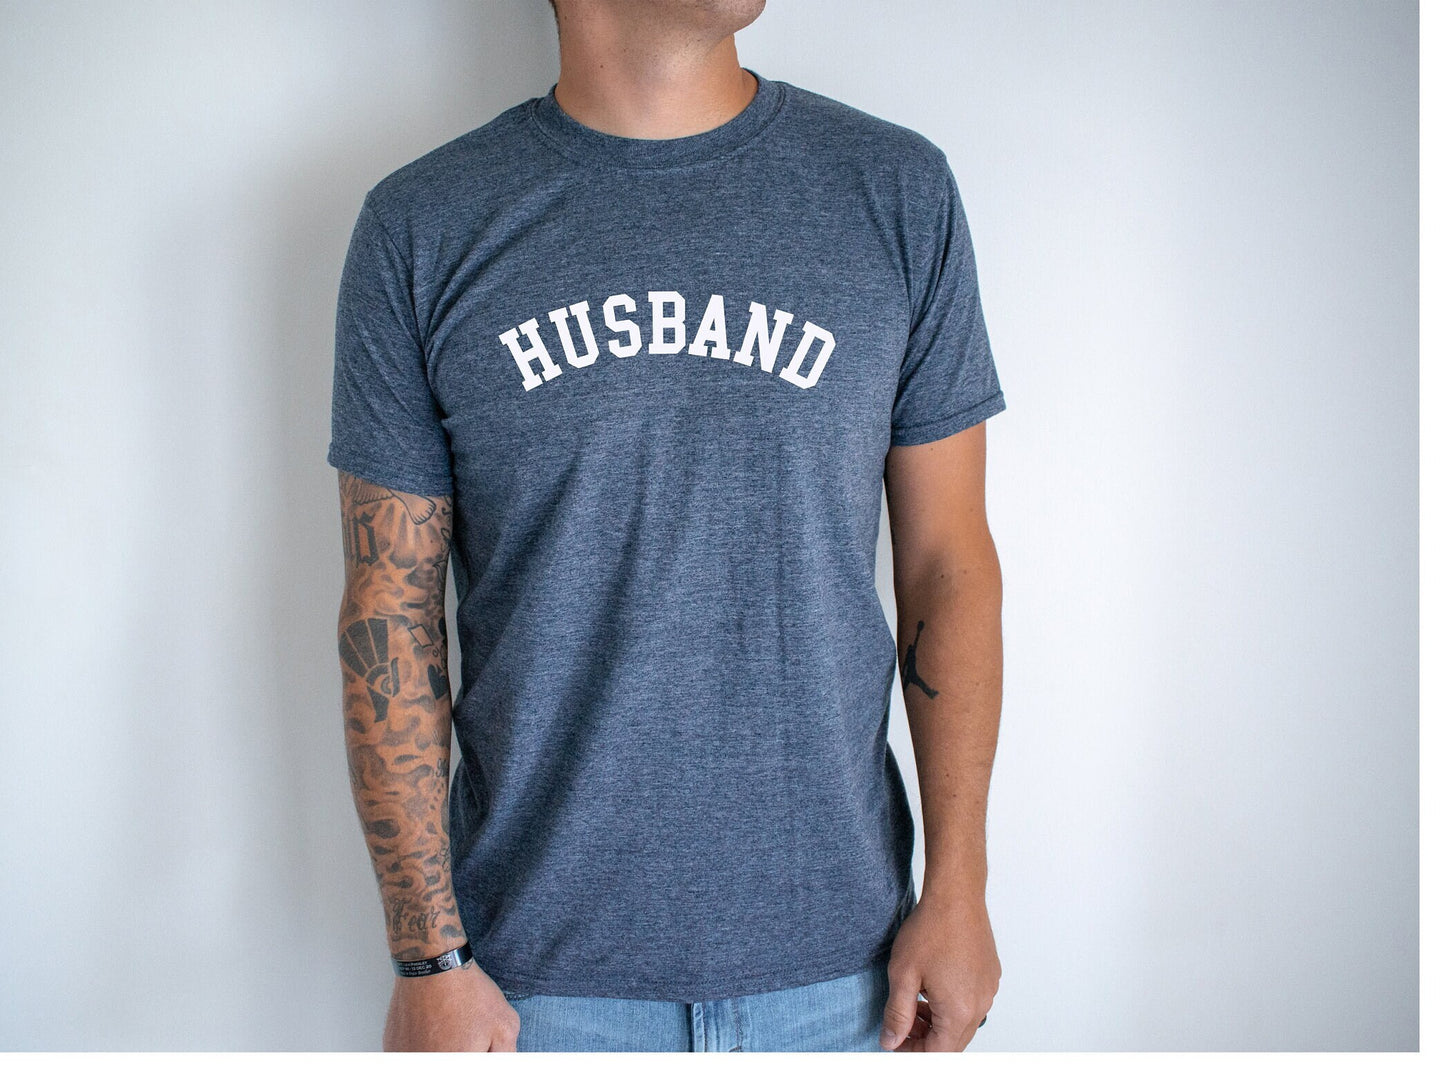 Trophy Husband Shirt, Gift for Him, Funny Husband Shirt, Gift from Wife, Anniversary Gift for Him, Gift for Husband, Anniversary Present